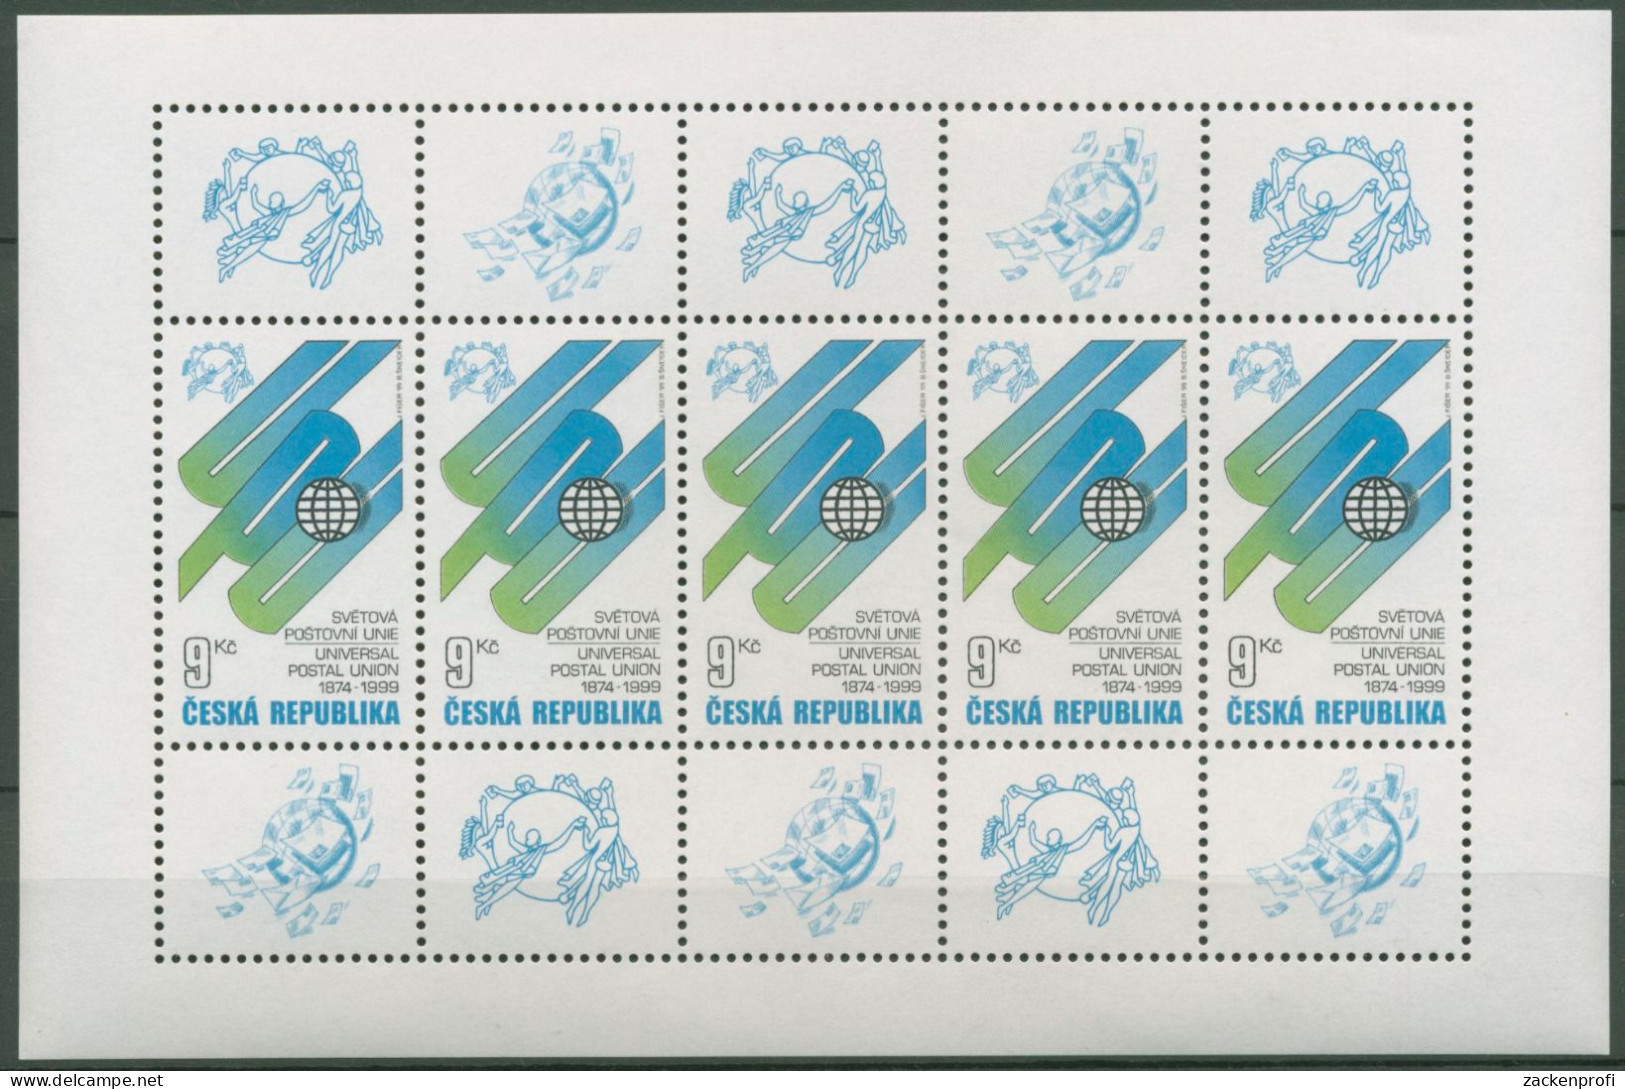 Tschechische Republik 1999 Weltpostverein UPU 224 K Postfrisch (C62769) - Blocks & Sheetlets